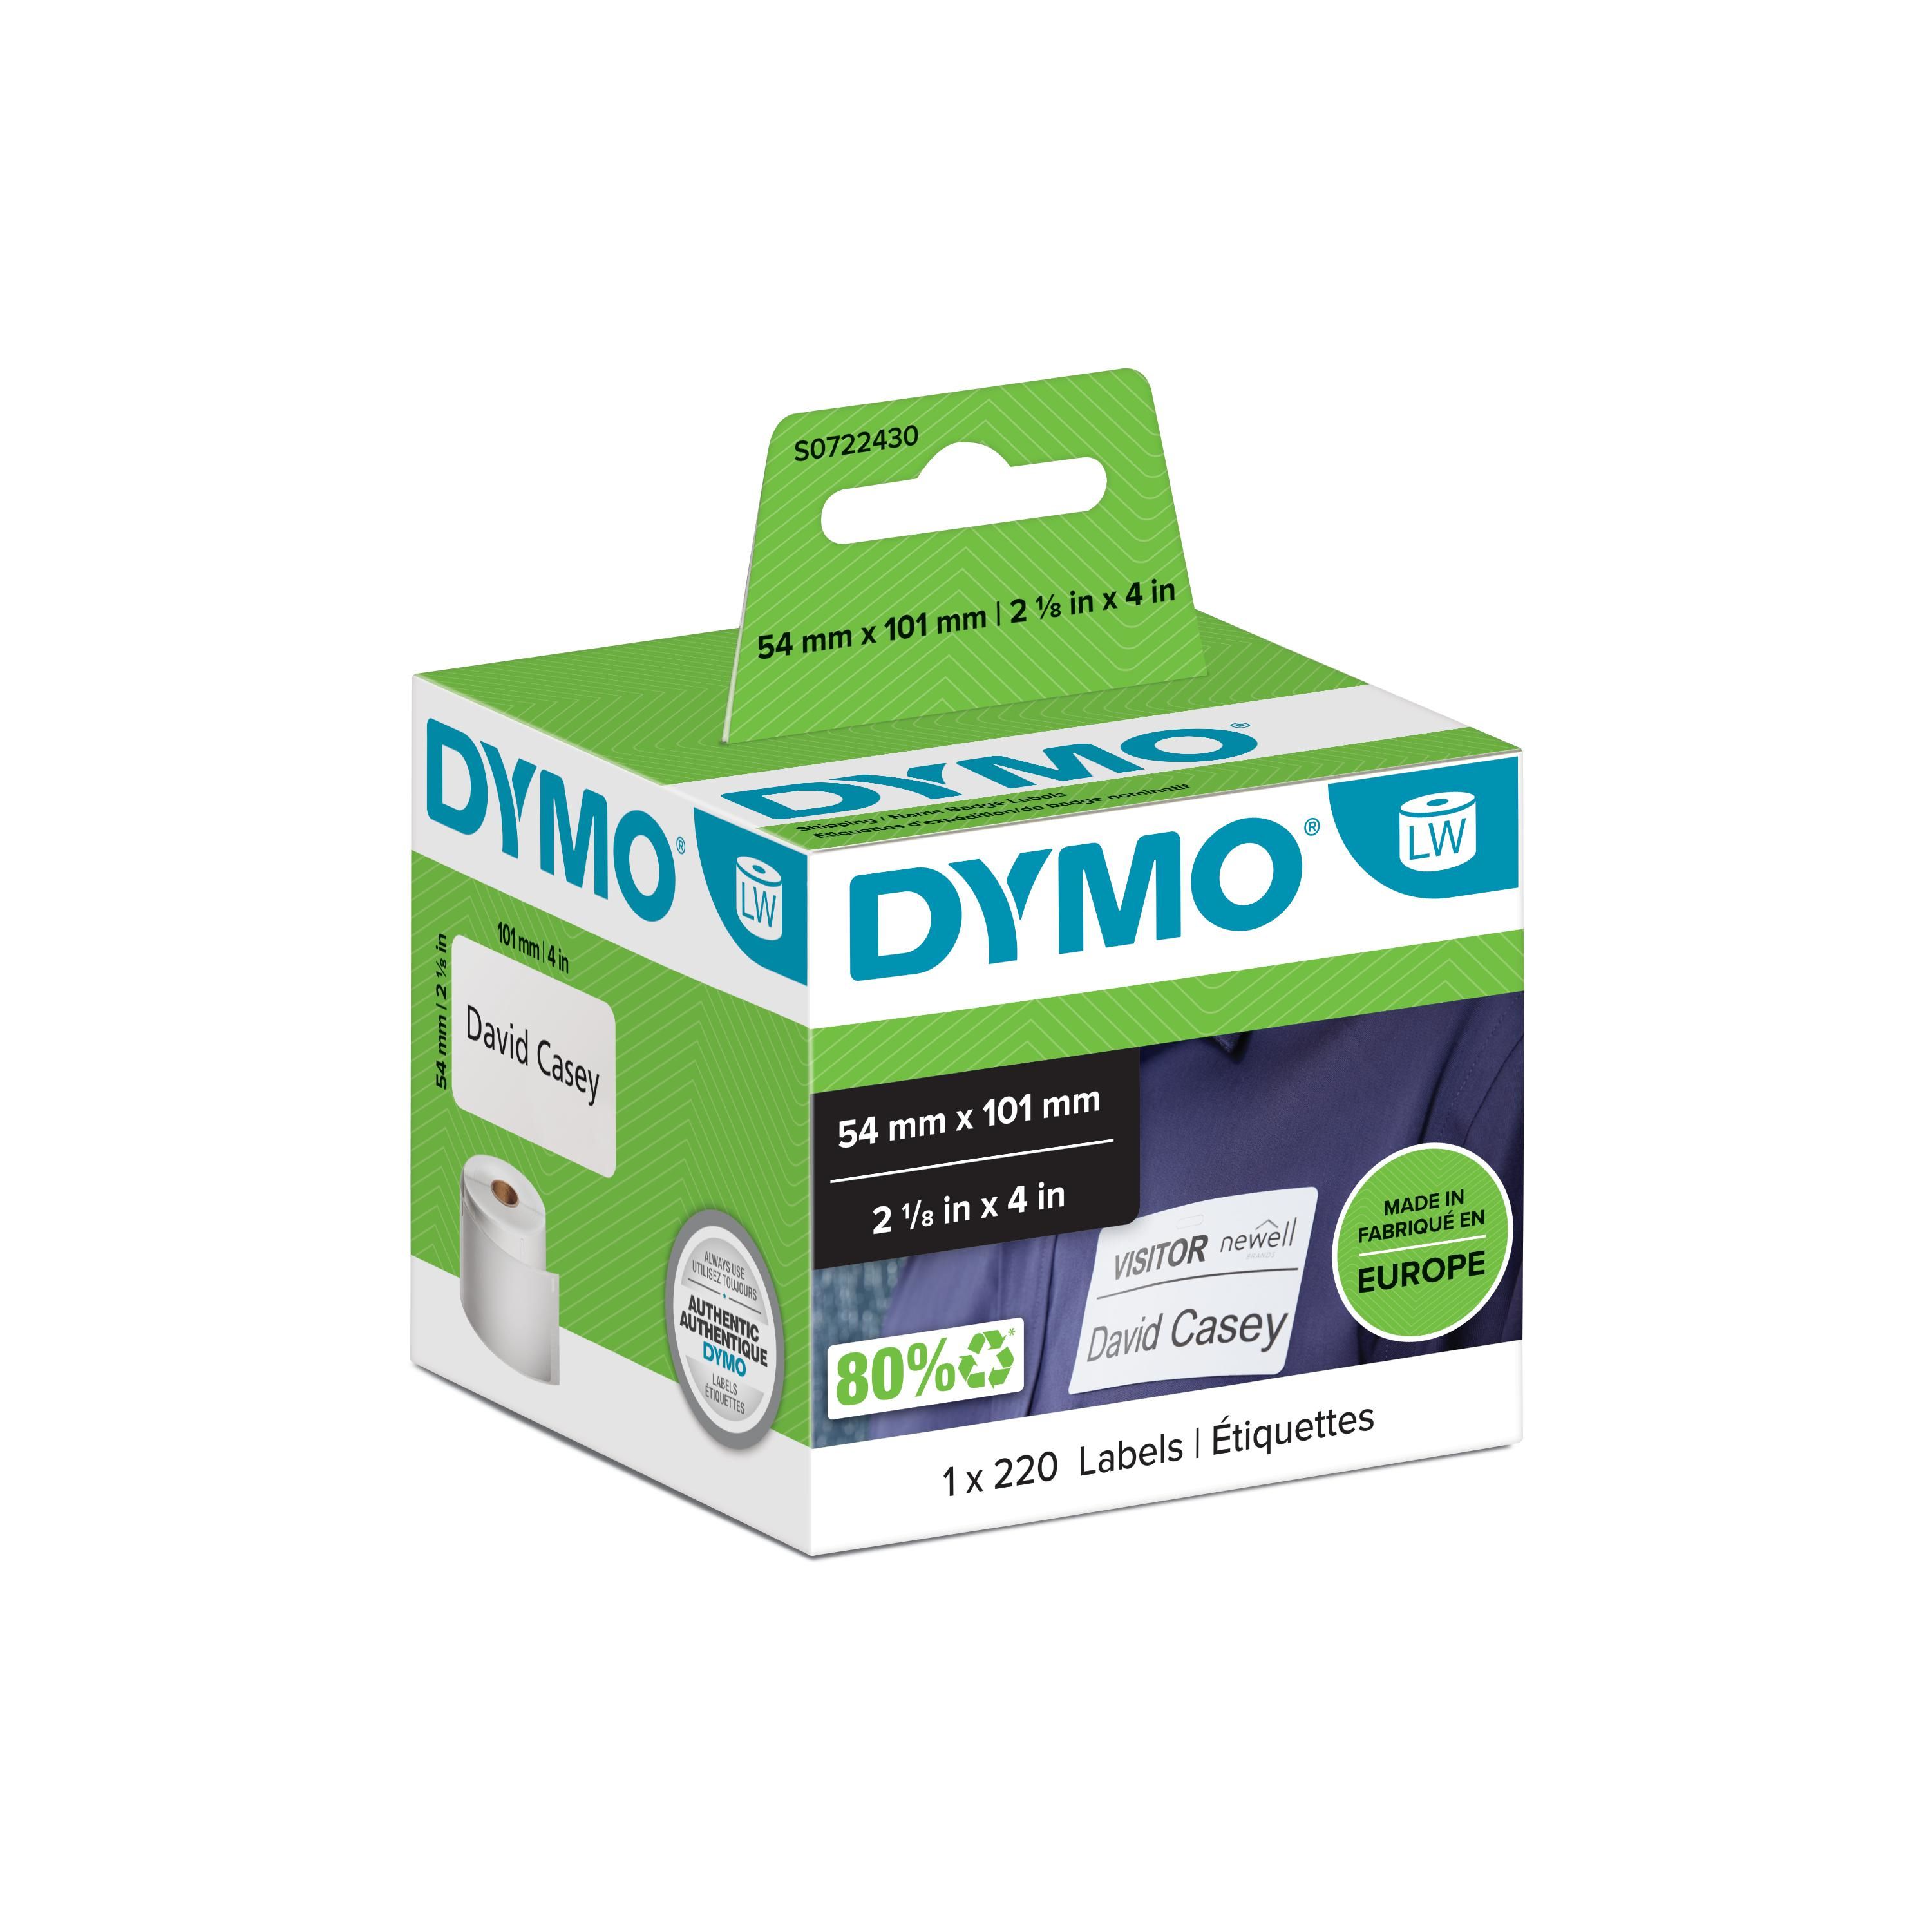 DYMO LW - Etichette di spedizione/badge nominativi - 54 x 101 mm -  S0722430, Carta per stampante